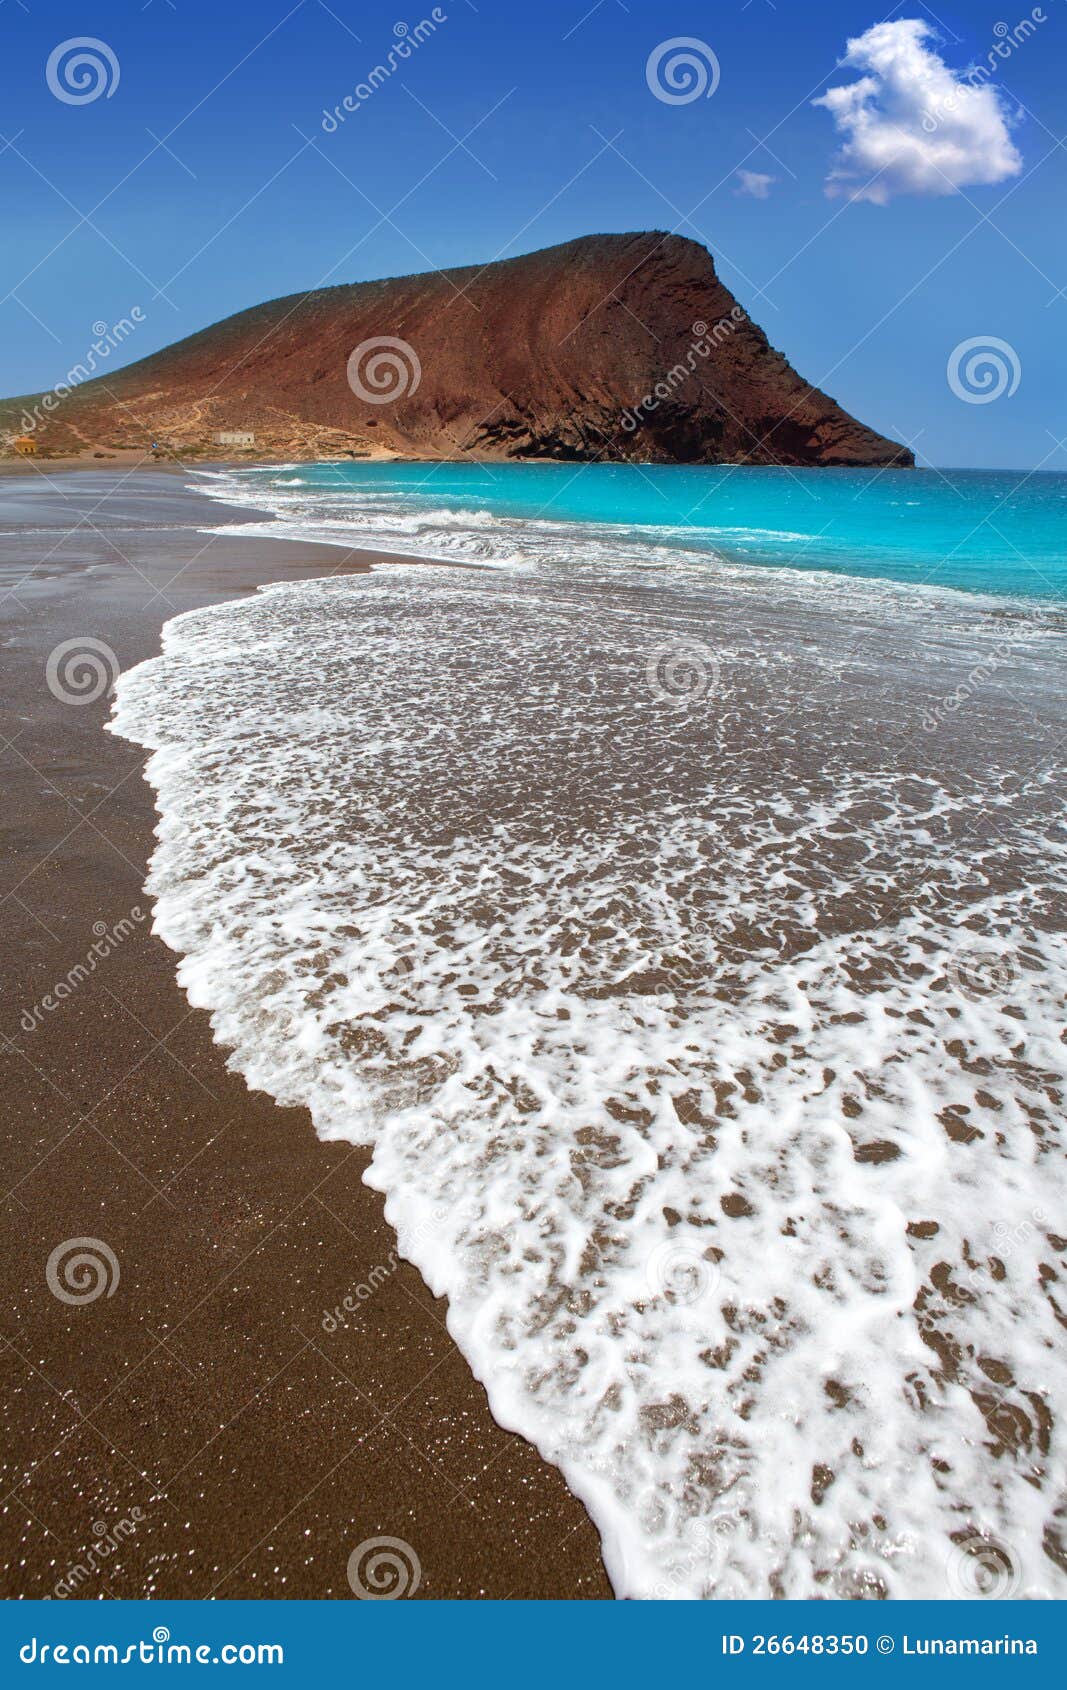 beach playa de la tejita in tenerife